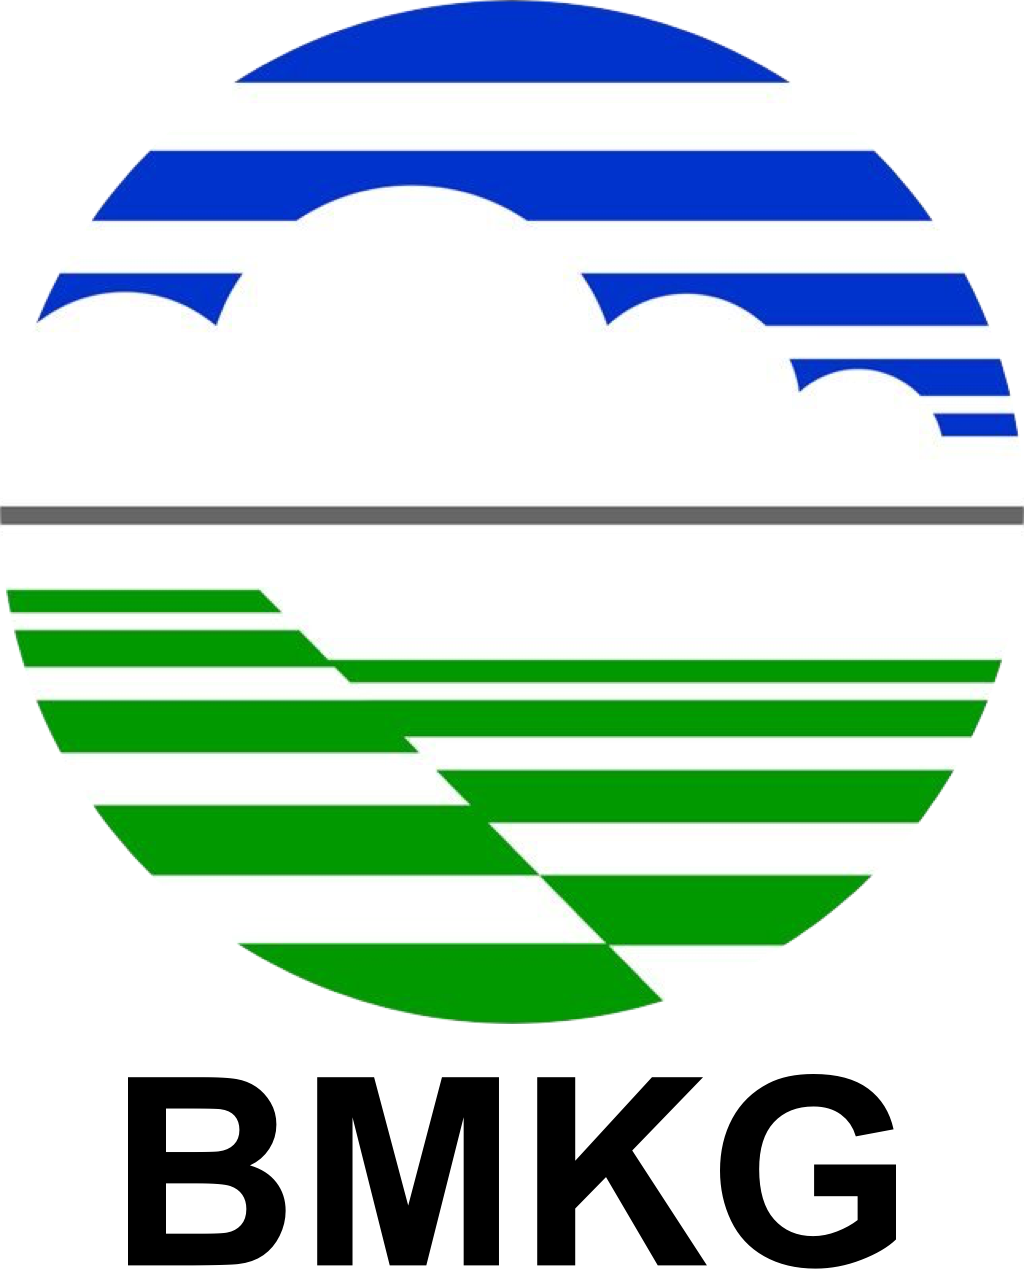 Logo Badan Meteorologi, Klimatologi, dan Geofisika